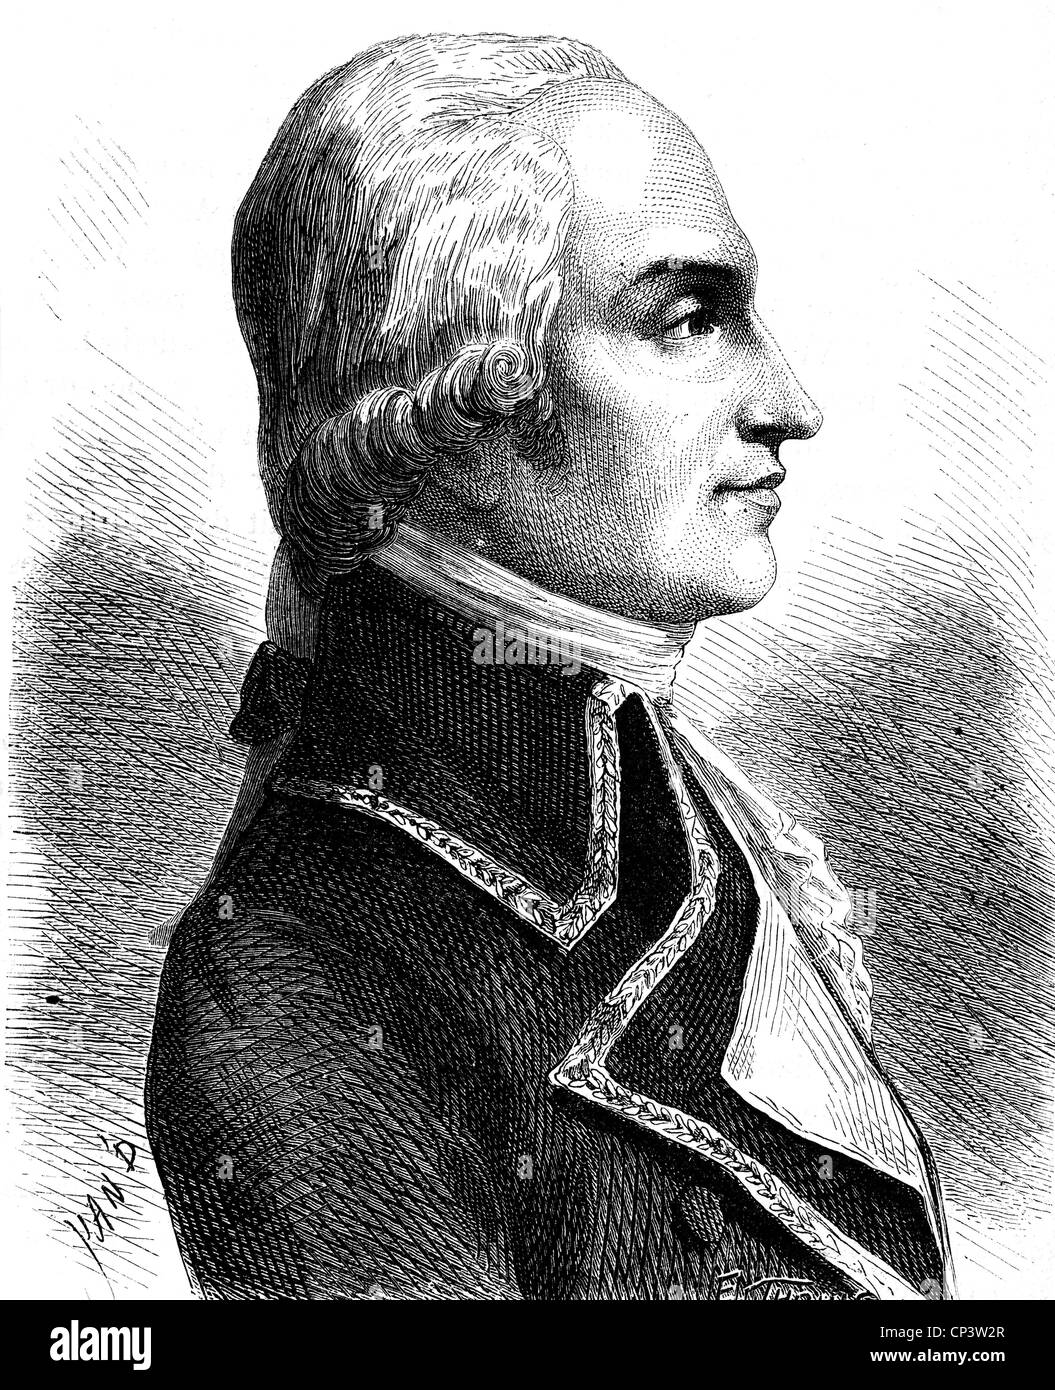 Biron, Armand-Louis de Gontaut, Duke of, 13.4.1747 - 31.12.1793, French general, portrait, wood engraving, 19th century, Stock Photo